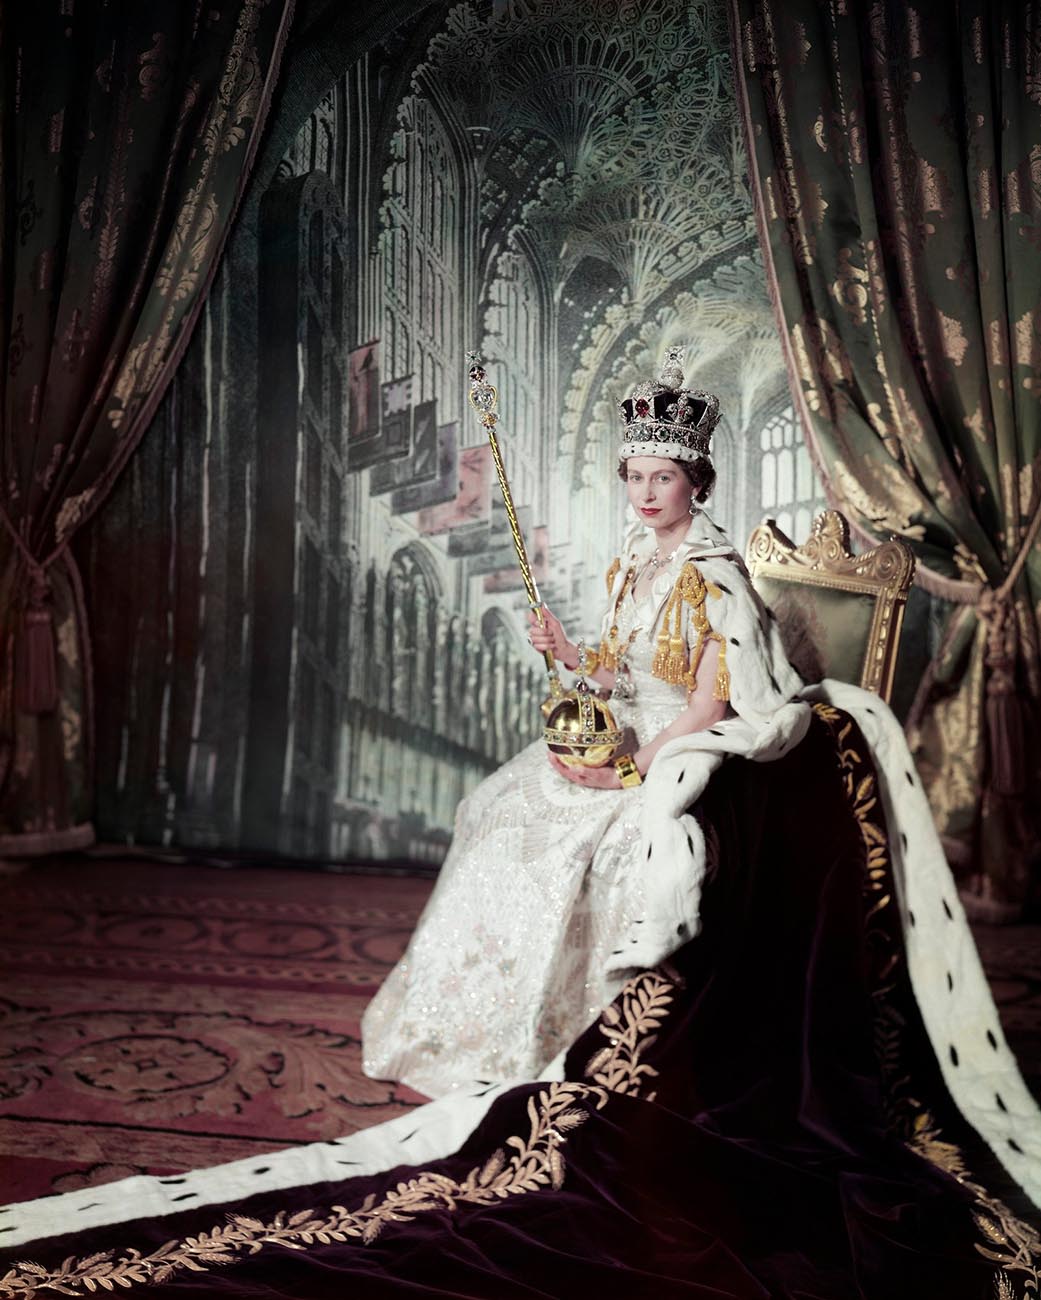 Cecil Beaton (1904-80) - Queen Elizabeth II (b.1926) on her Coronation Day